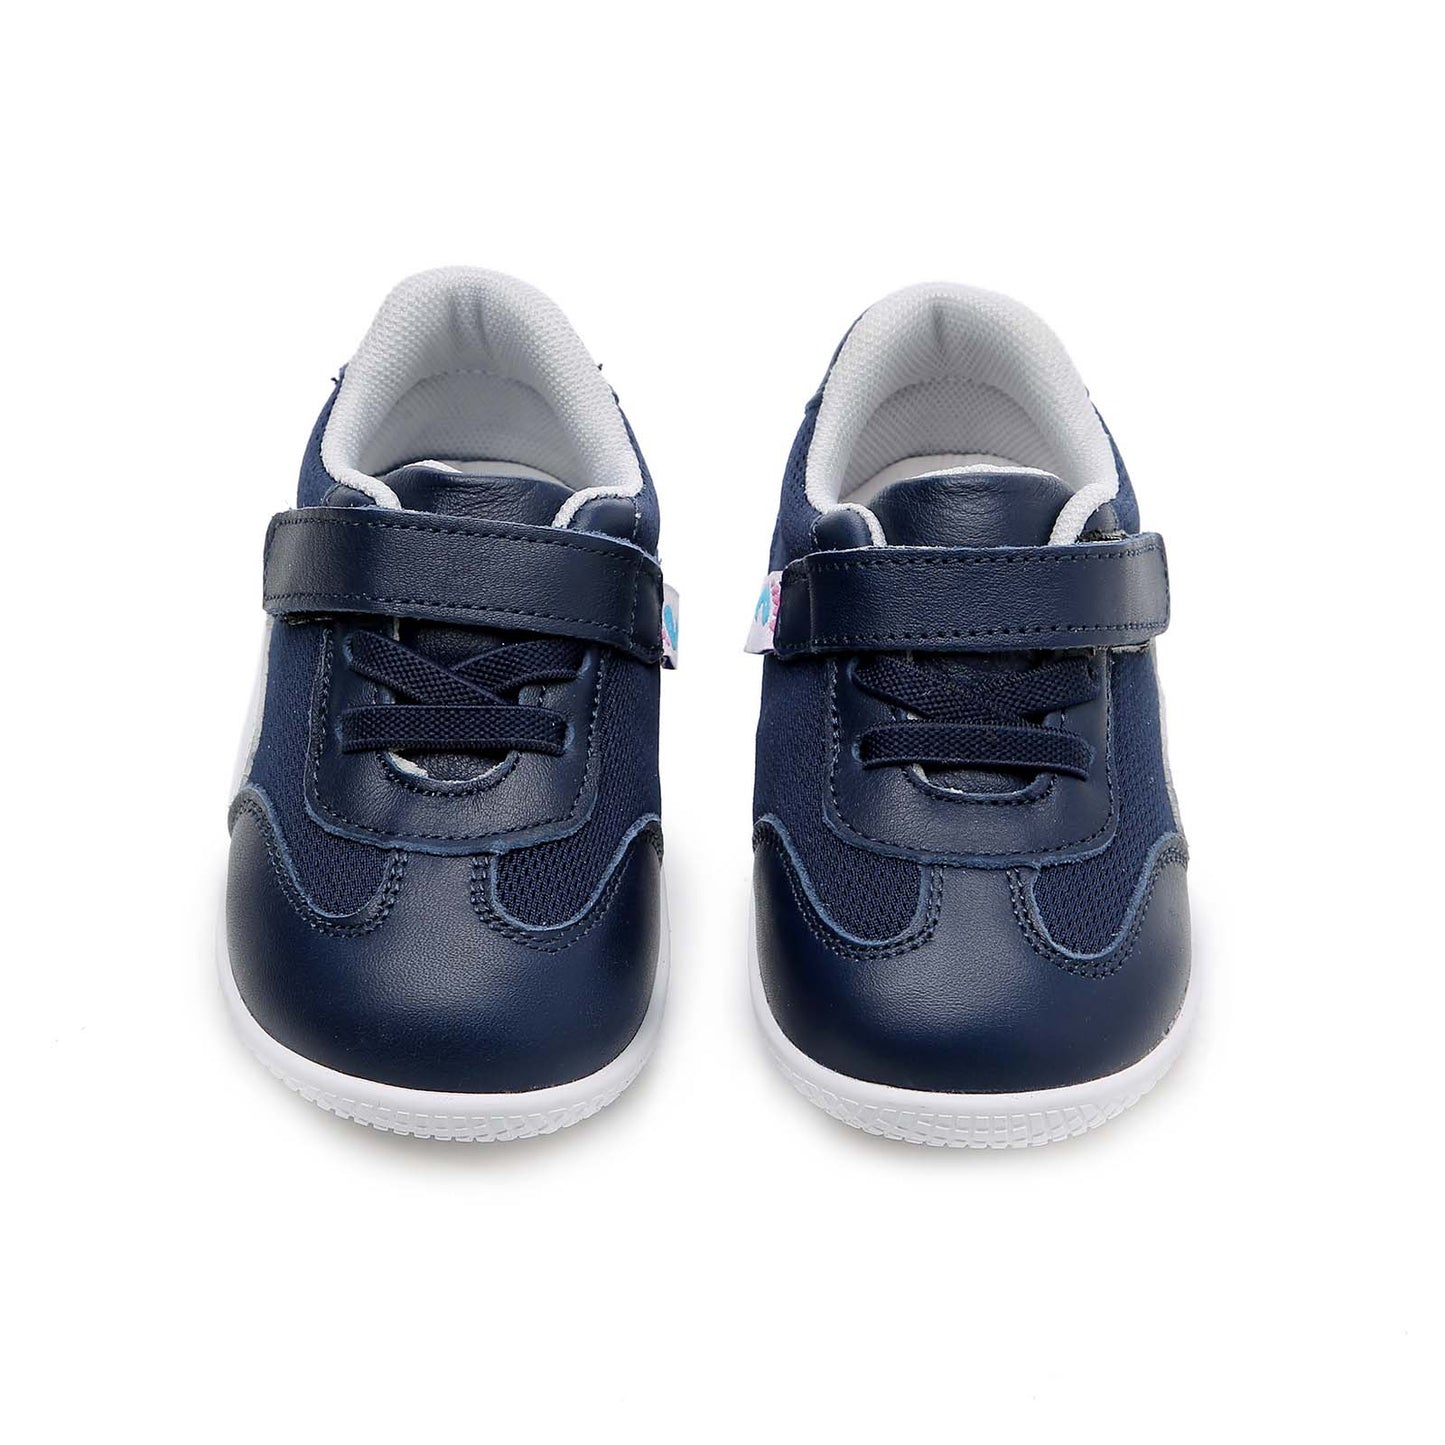 Freycoo - Navy Federick Flexi-sole Toddler Shoes